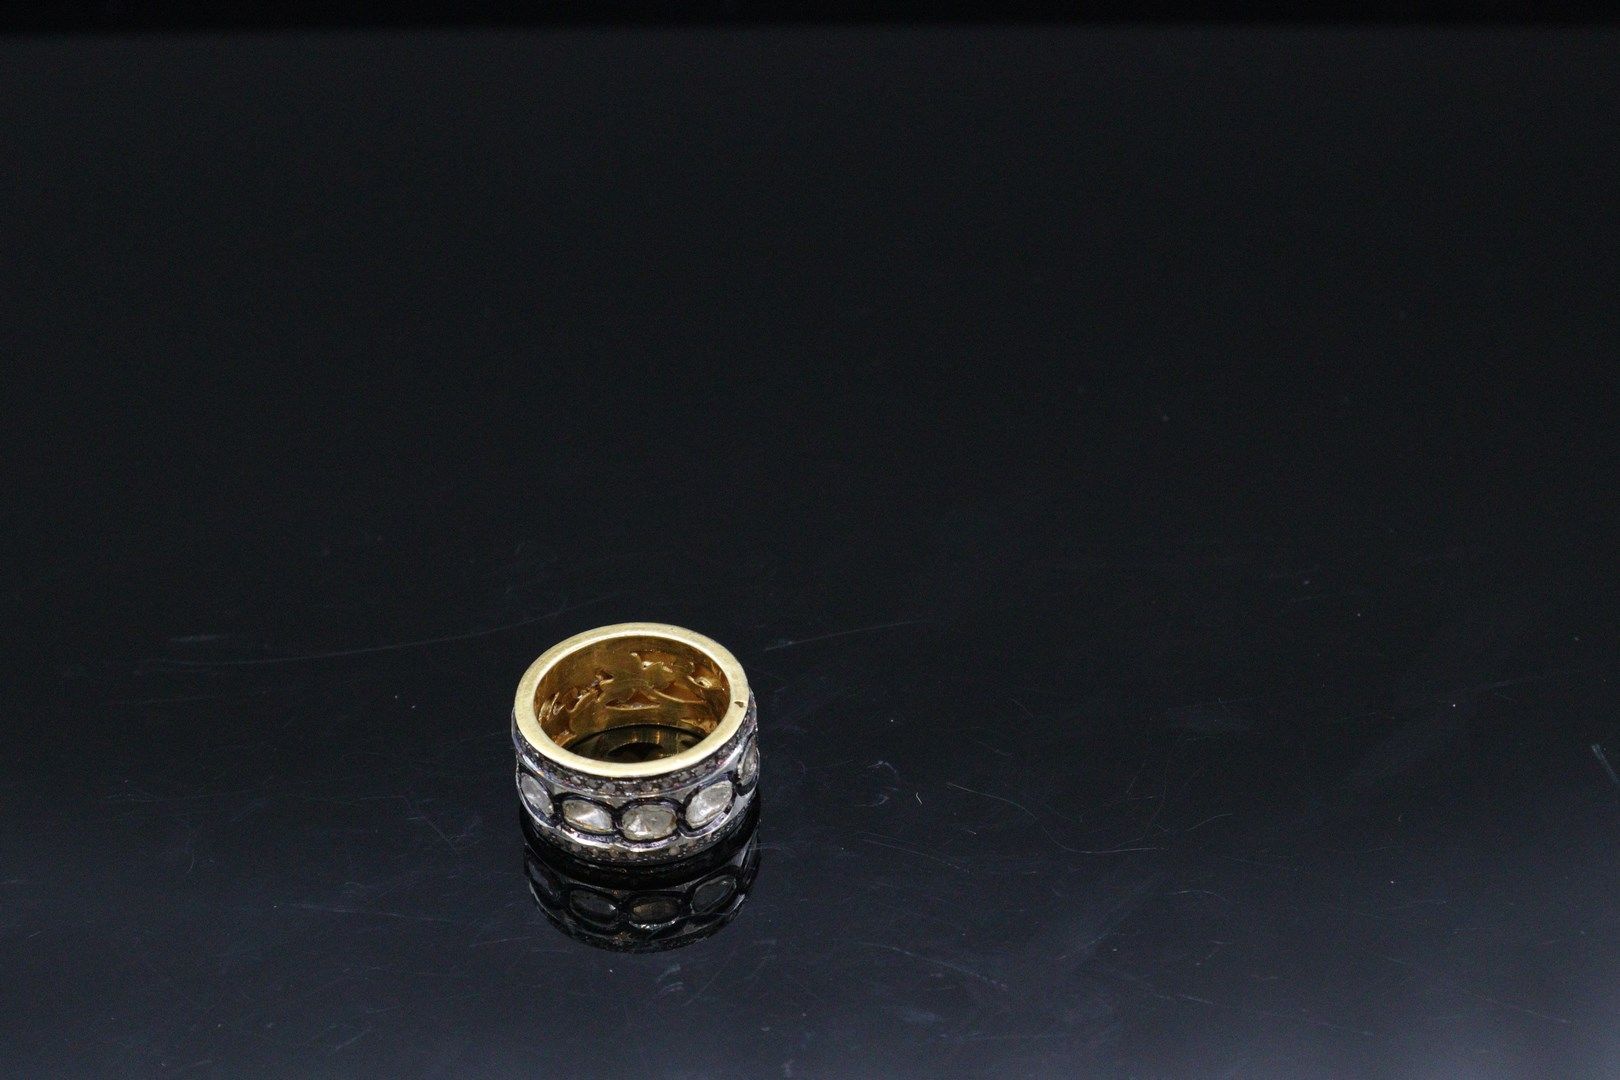 Null 925°银和vermeil戒指，不规则的玫瑰切割钻石镶嵌在发黑的银色图案中，被两行小钻石衬托着。 

尺寸 : 56.5 - 毛重 : 8.24 g